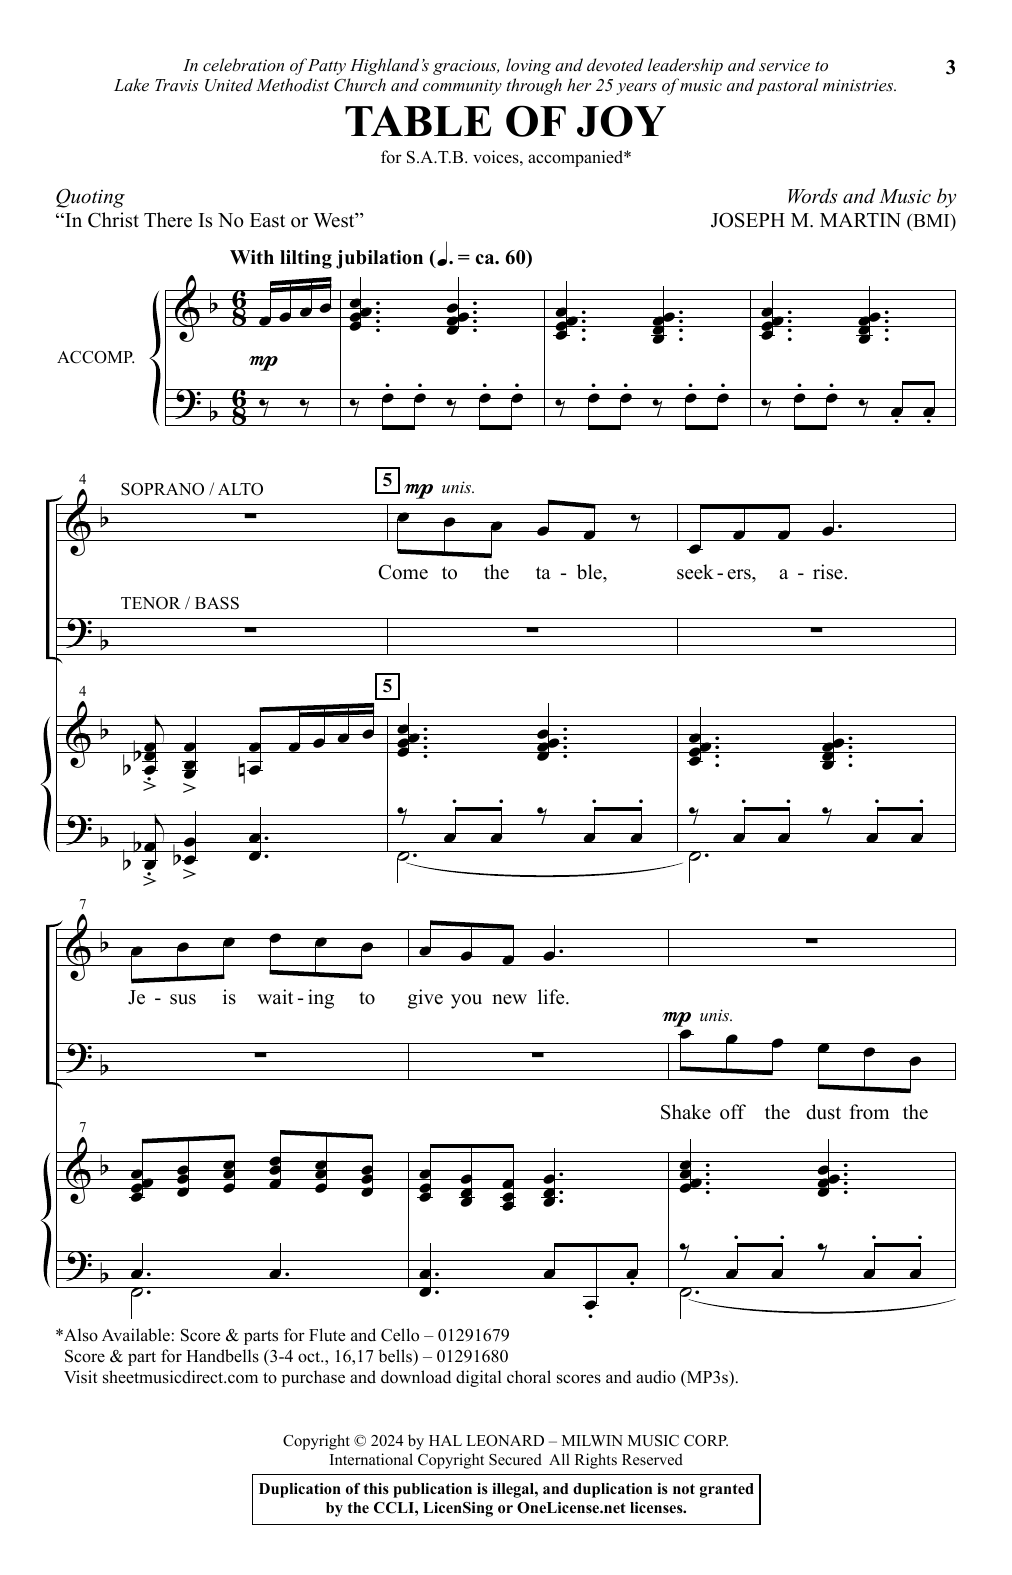 Joseph M. Martin Table Of Joy sheet music notes and chords arranged for SATB Choir